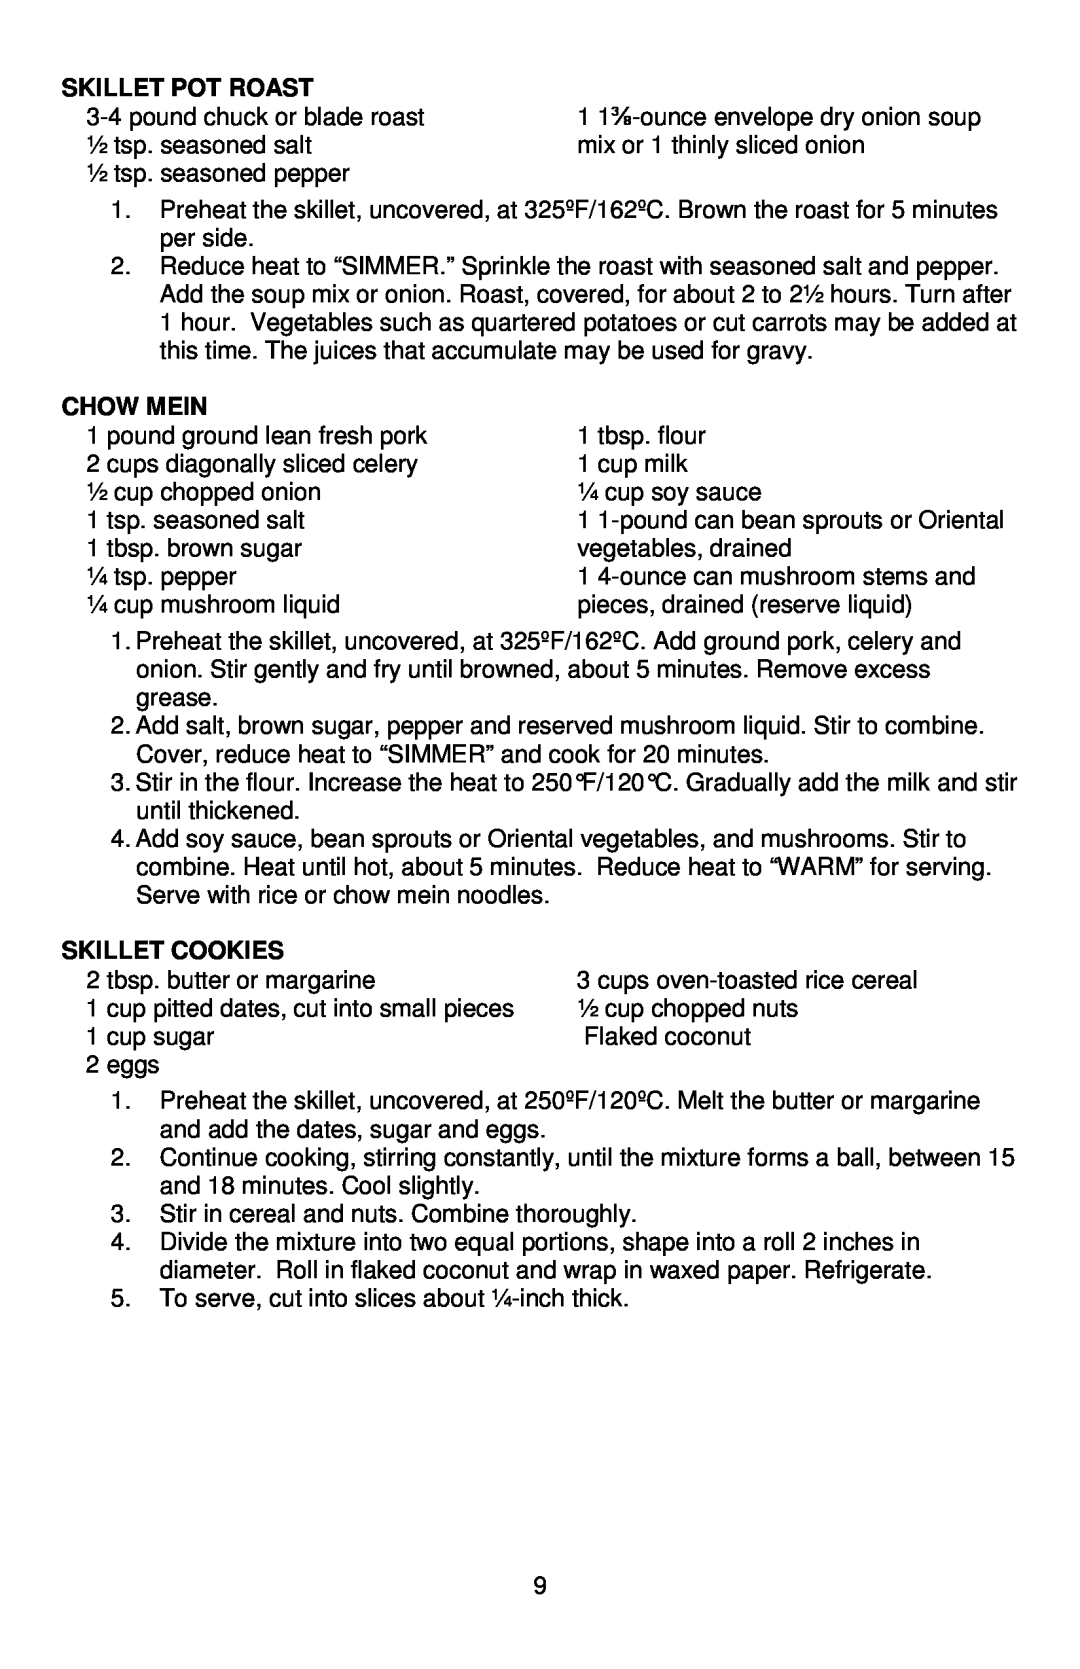 West Bend 72212, L5791B instruction manual Skillet Pot Roast, Chow Mein, Skillet Cookies 